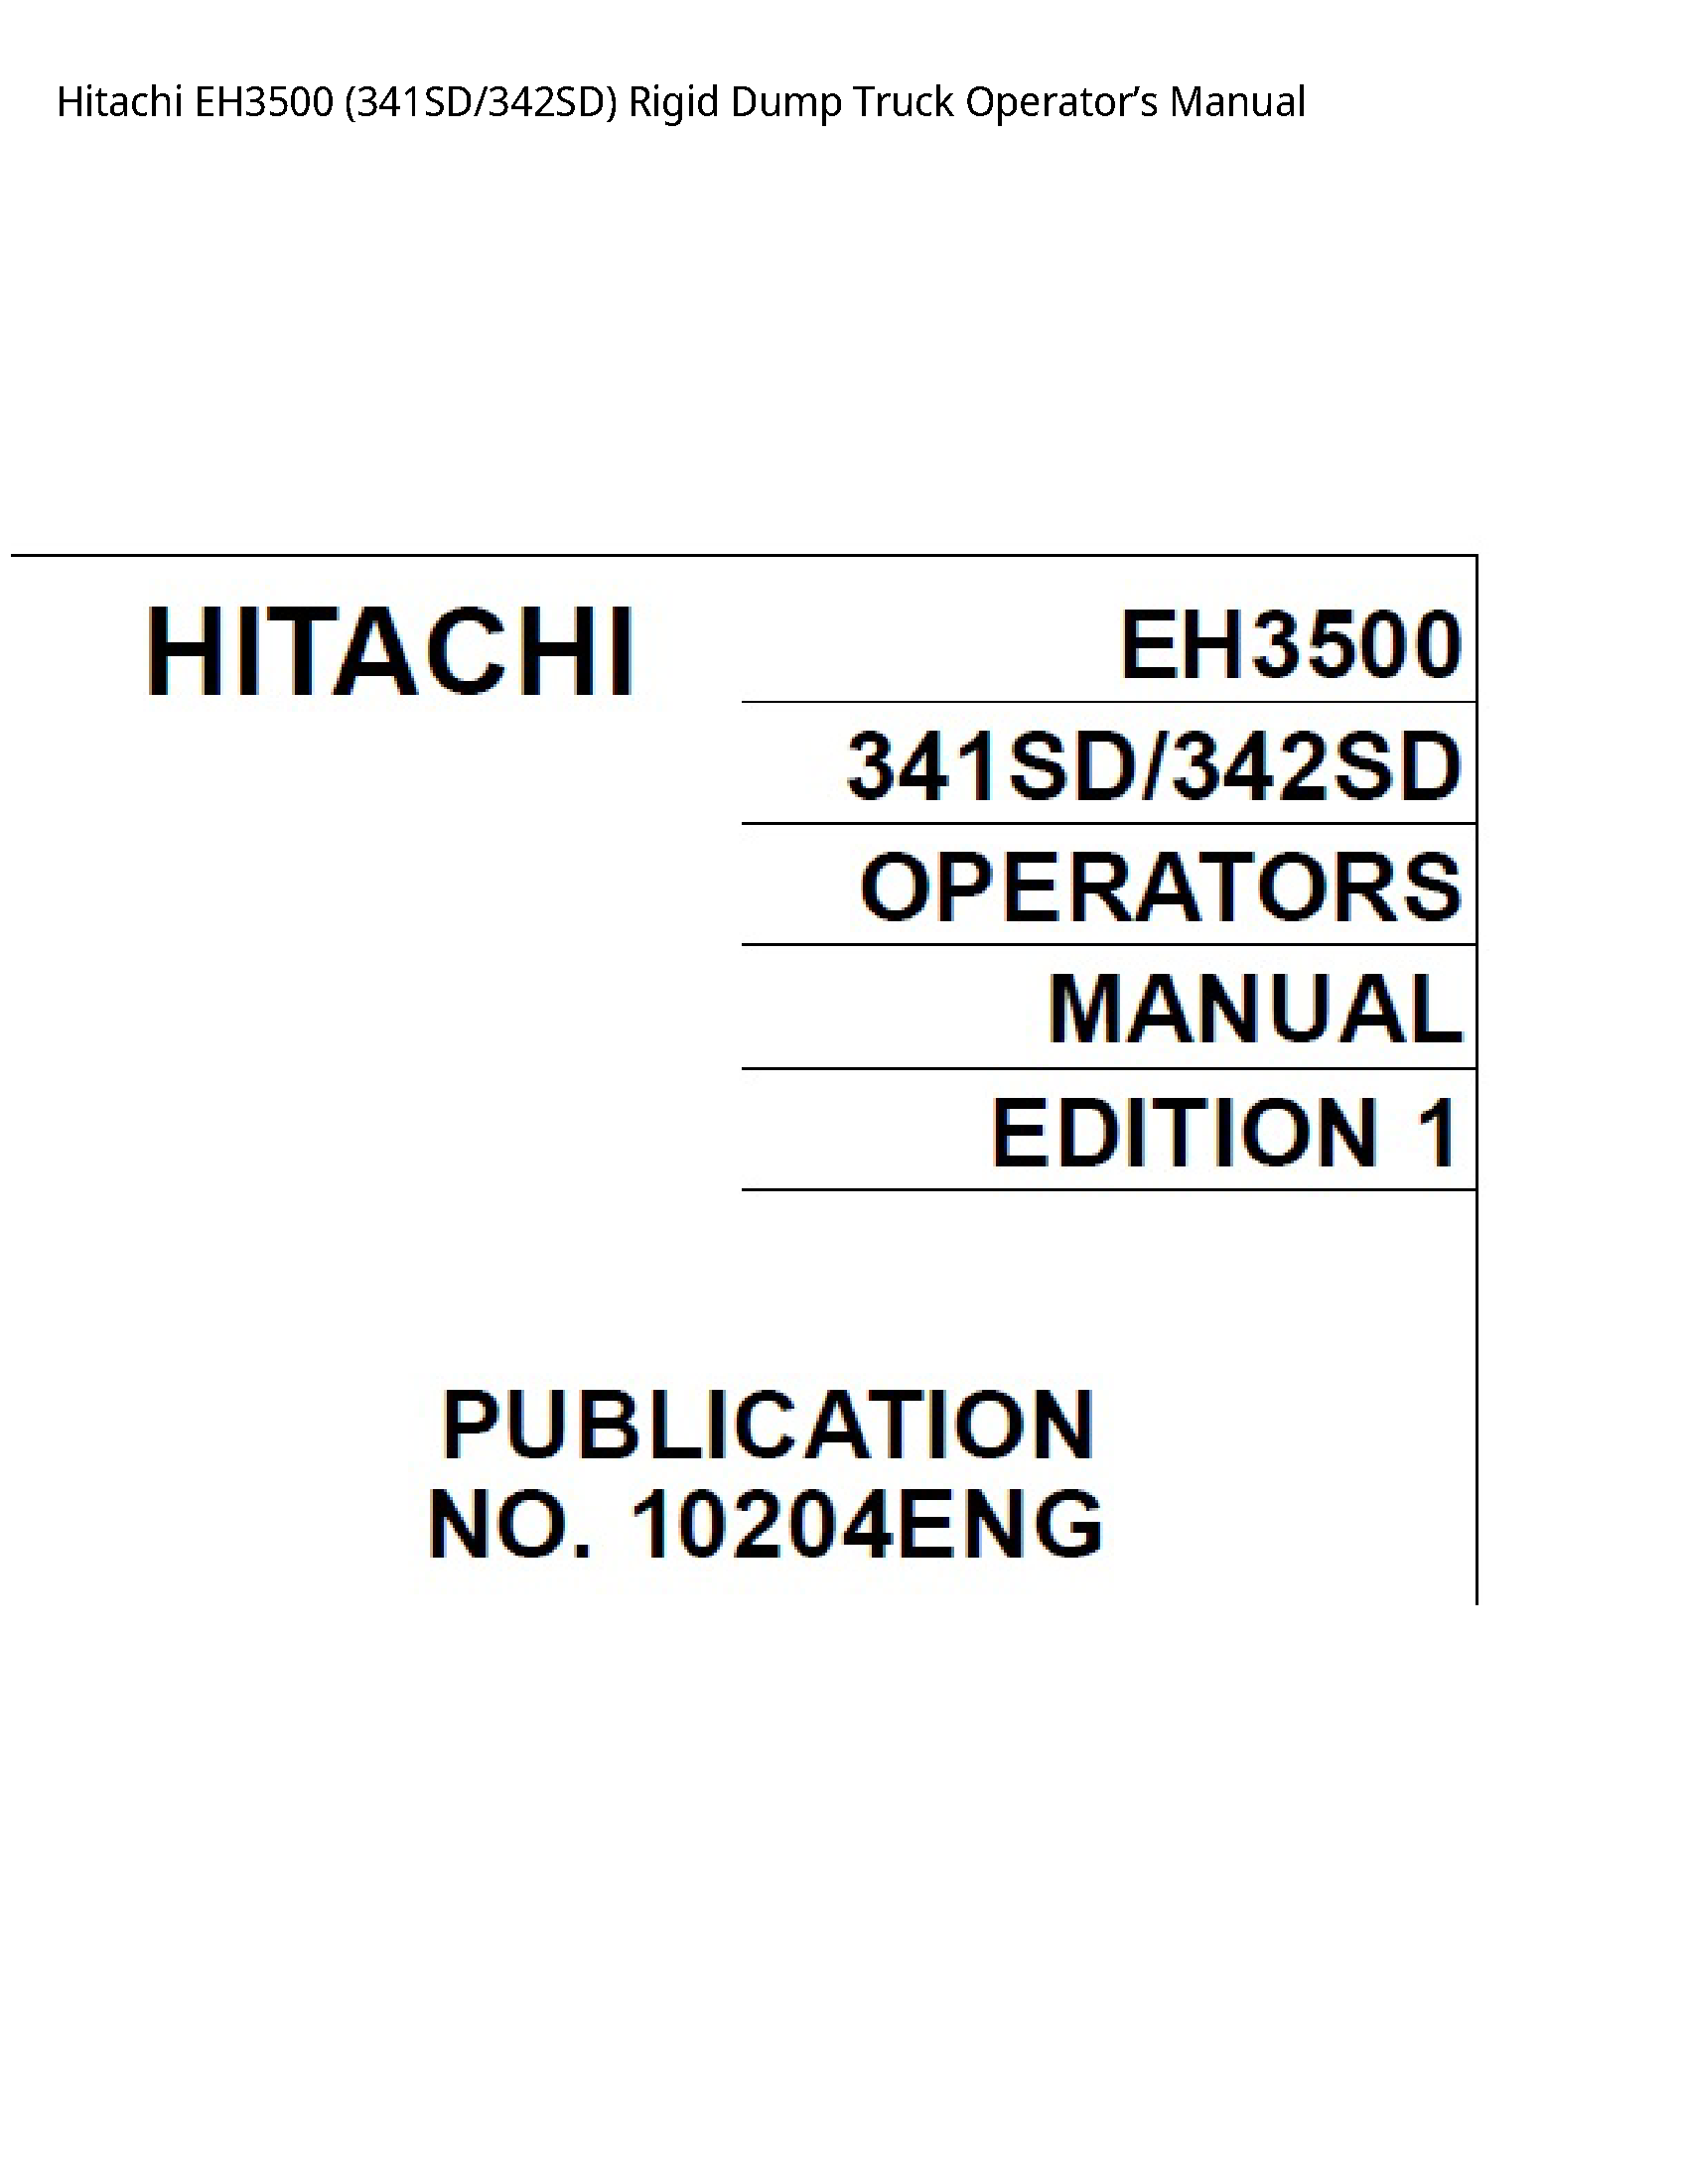 Hitachi EH3500 Rigid Dump Truck Operator’s manual